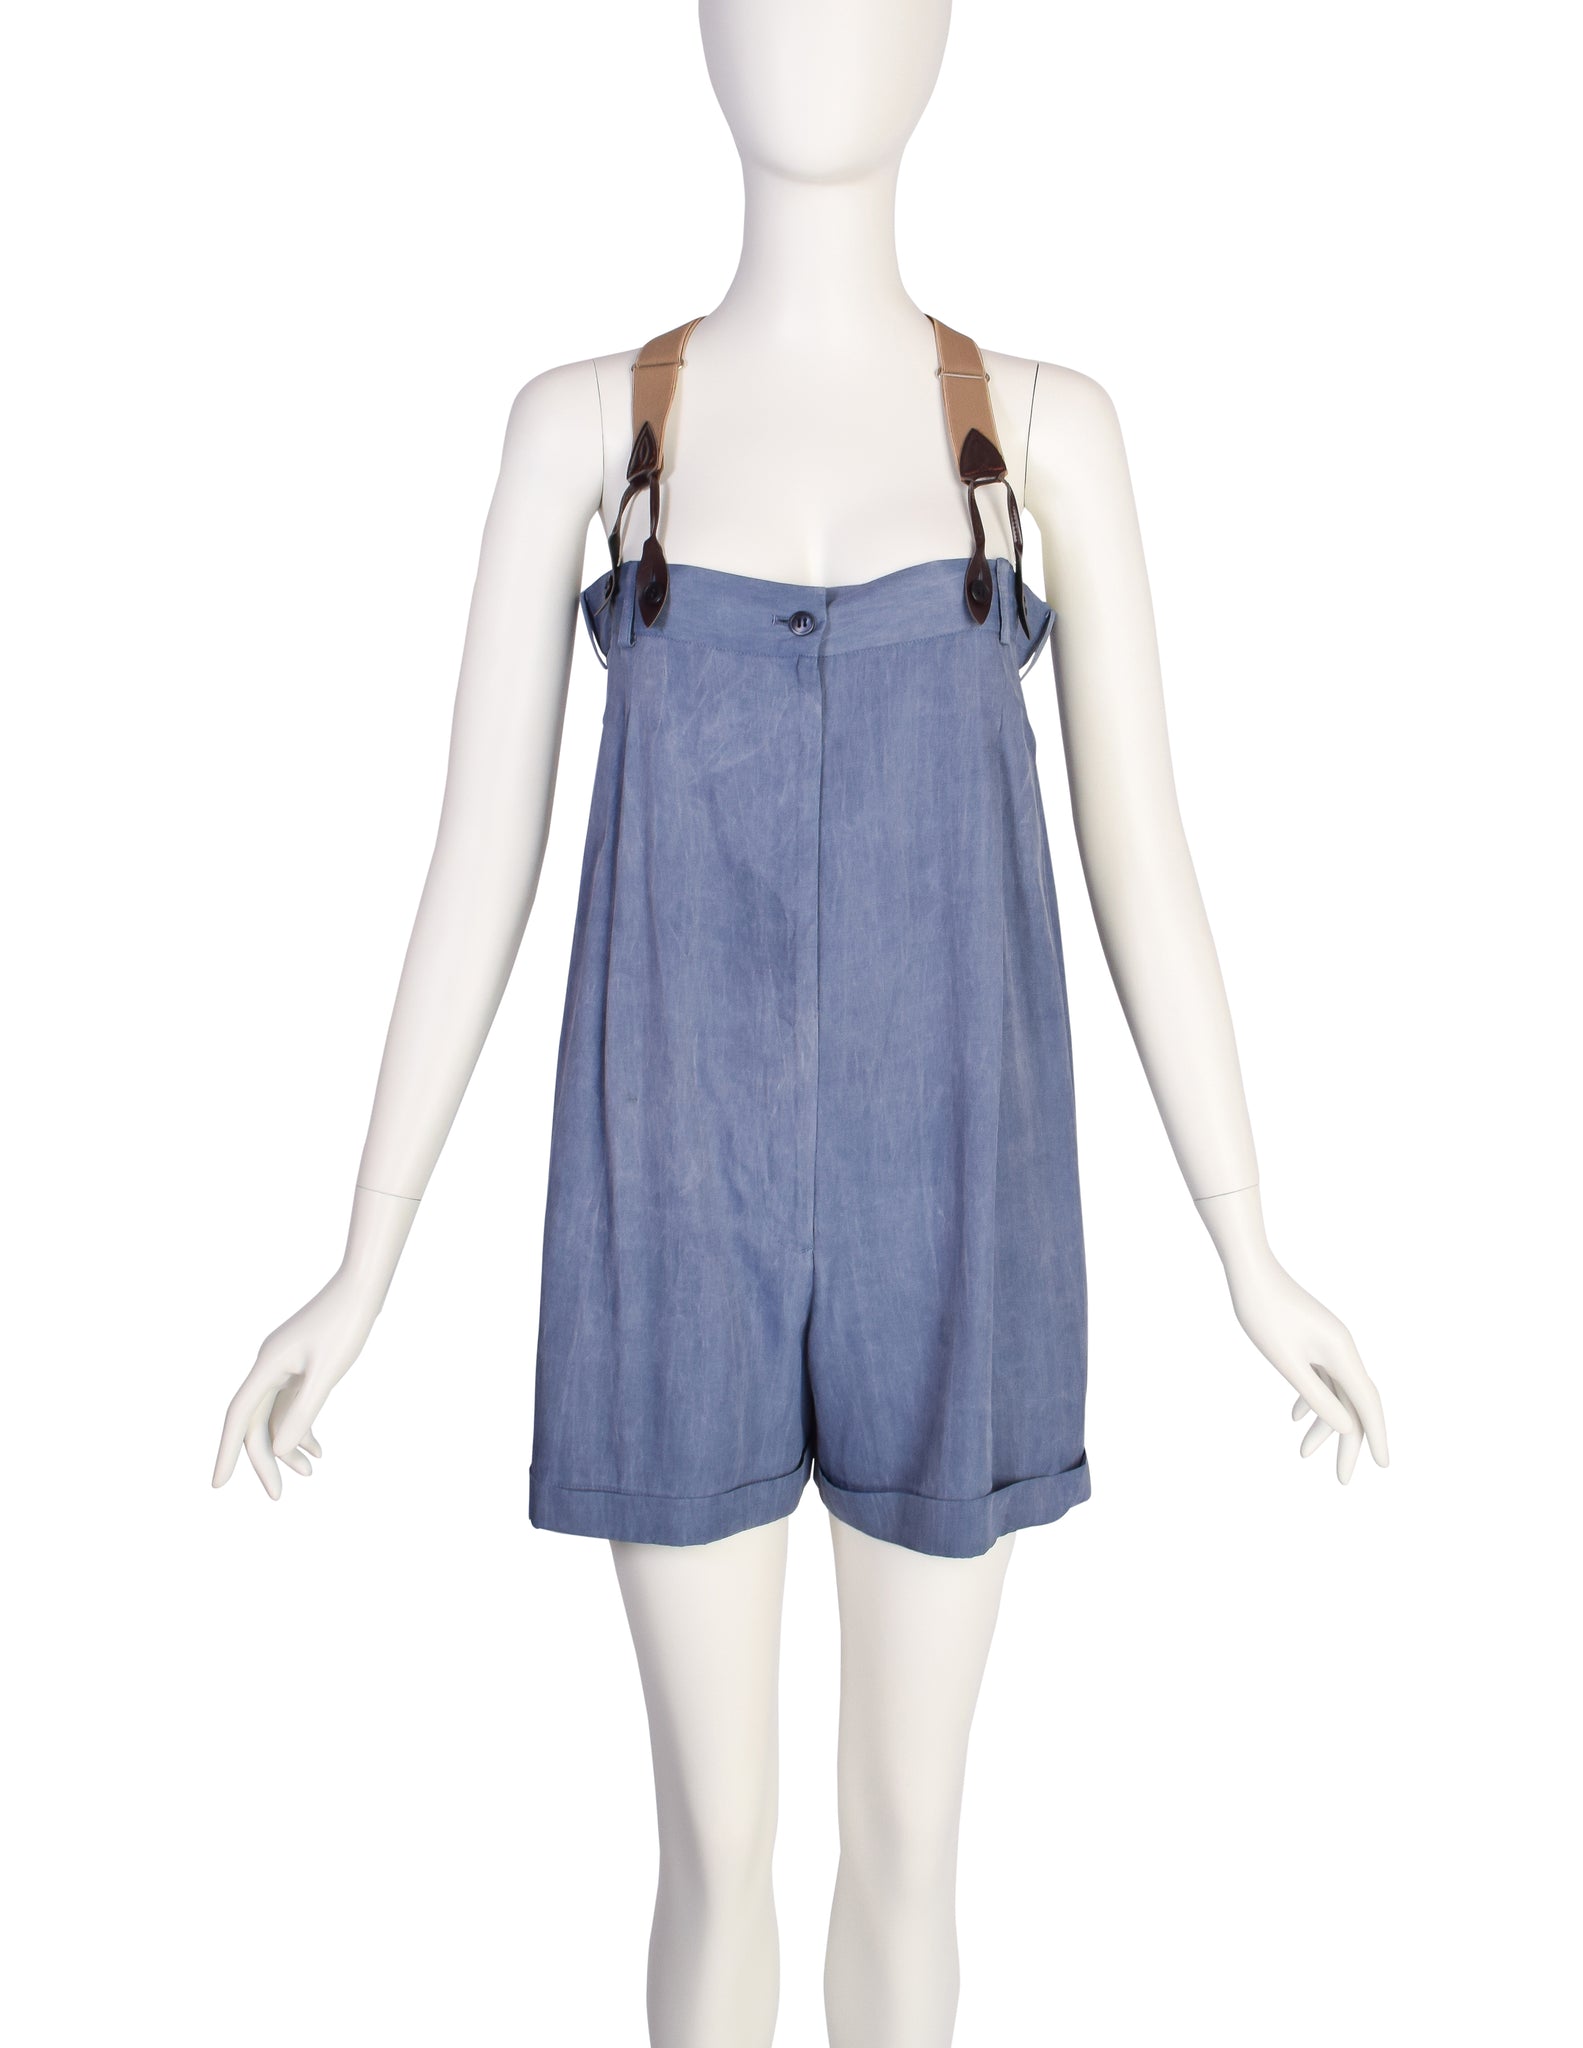 Jean Paul Gaultier Vintage SS 1993 Blue Suspender Shorts Romper